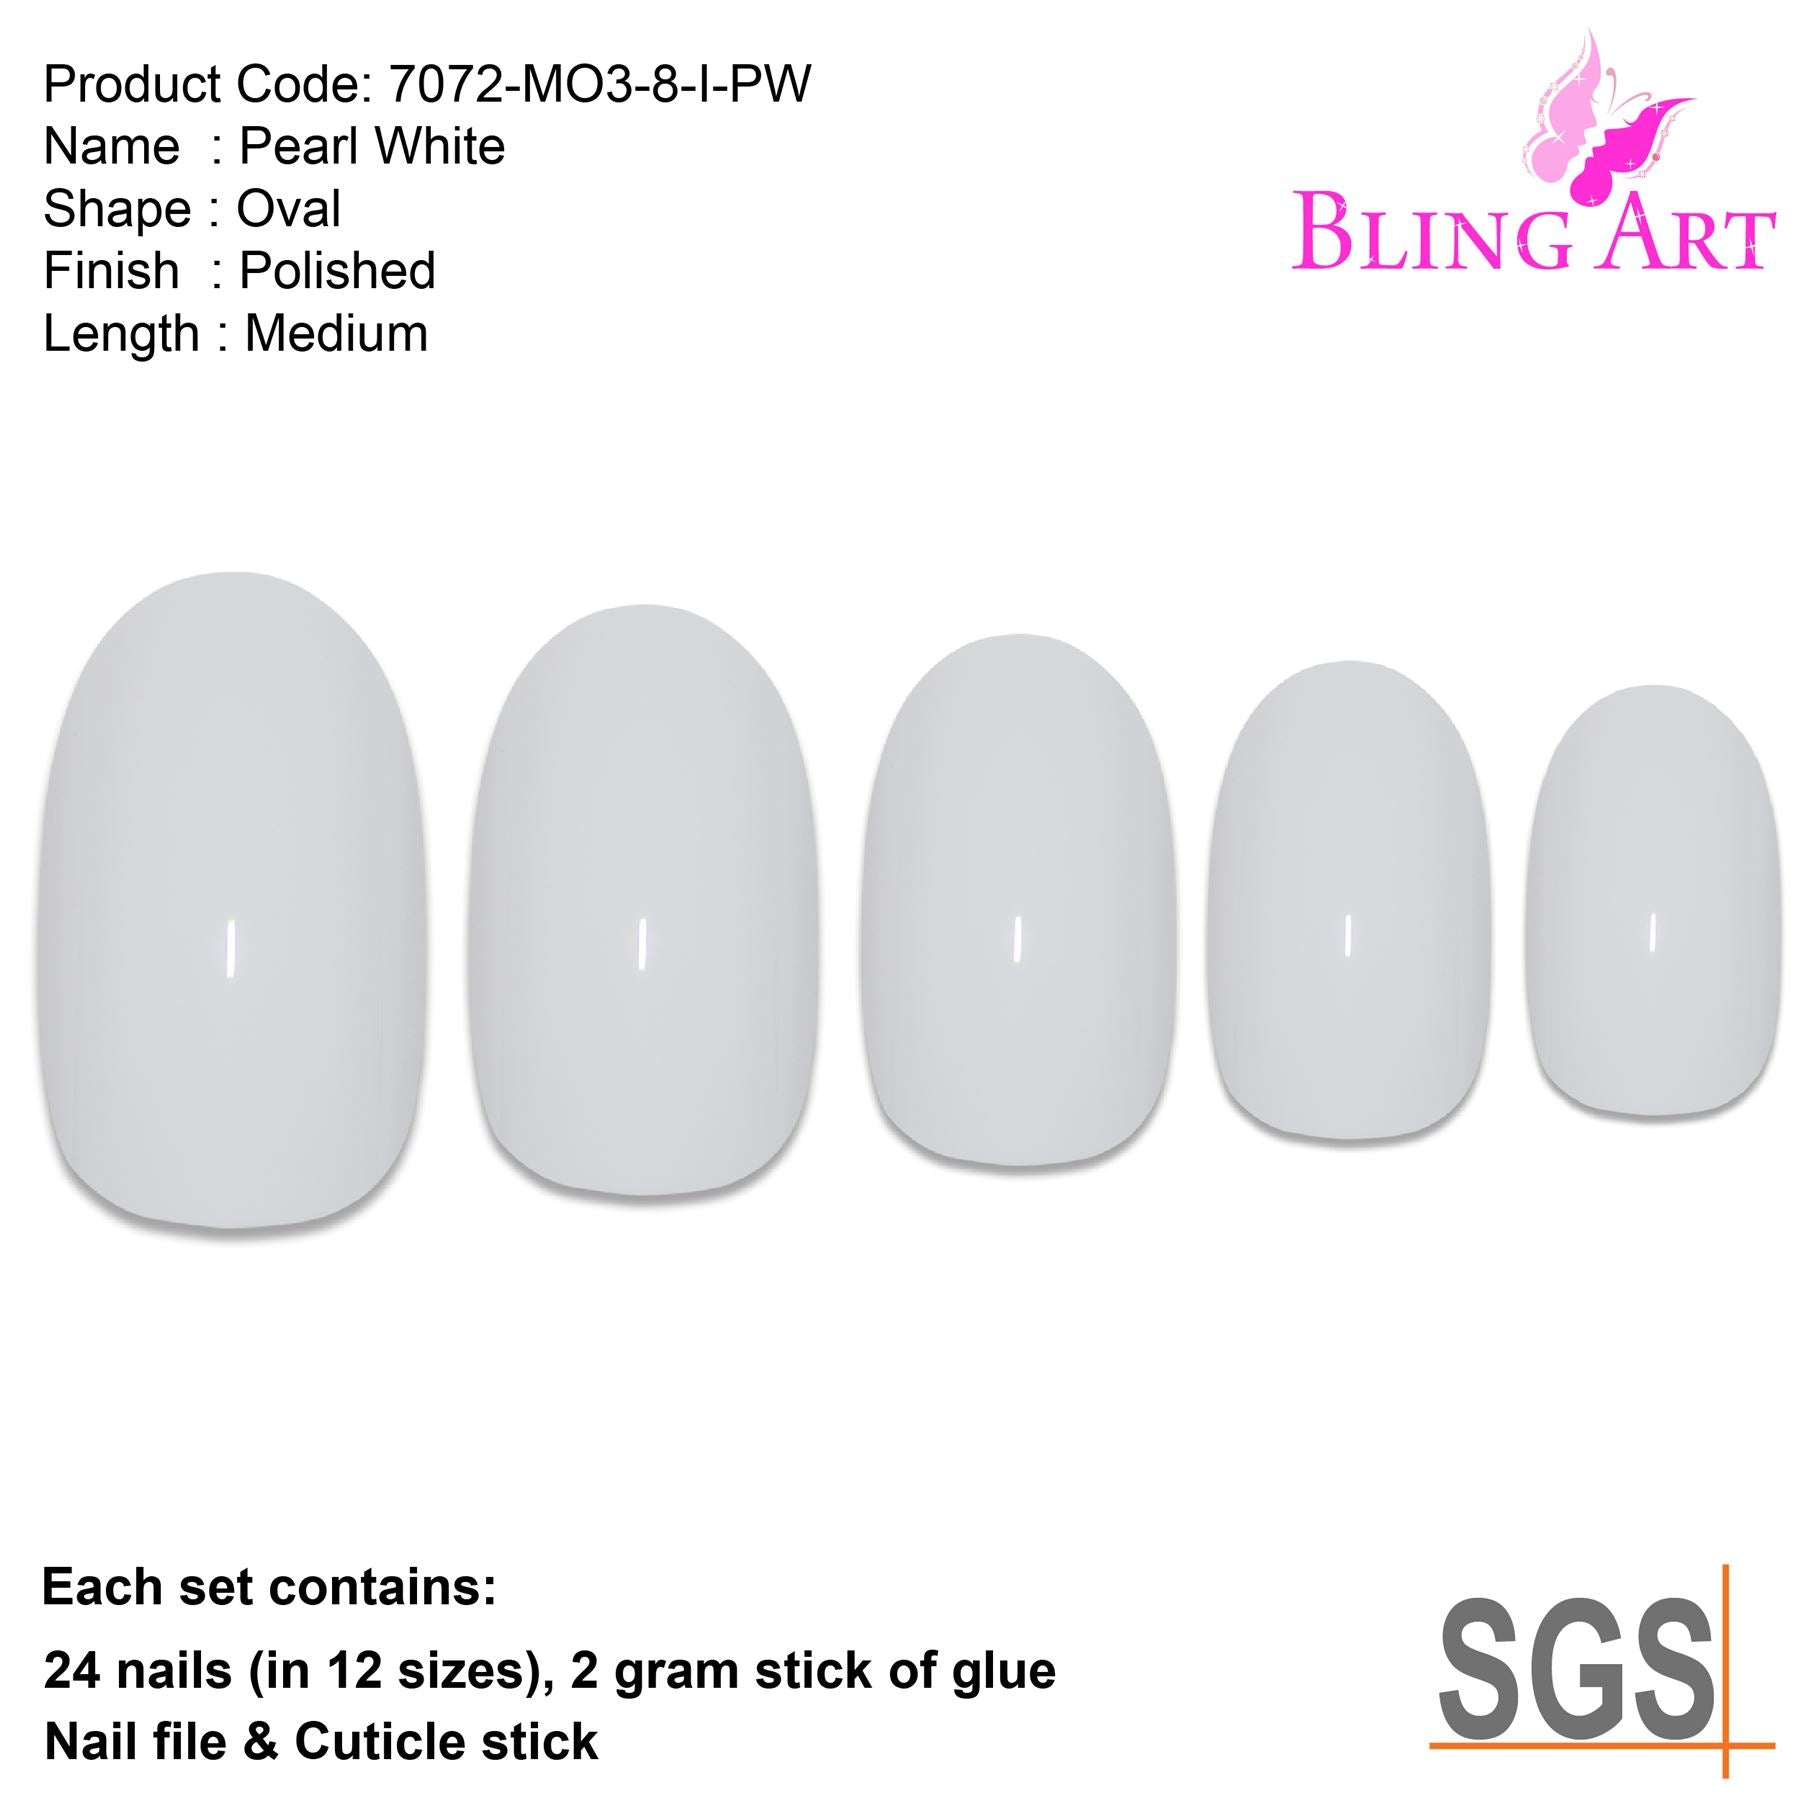 False Nails by Bling Art White Polished Oval Medium Fake 24 Acrylic Nail Tips